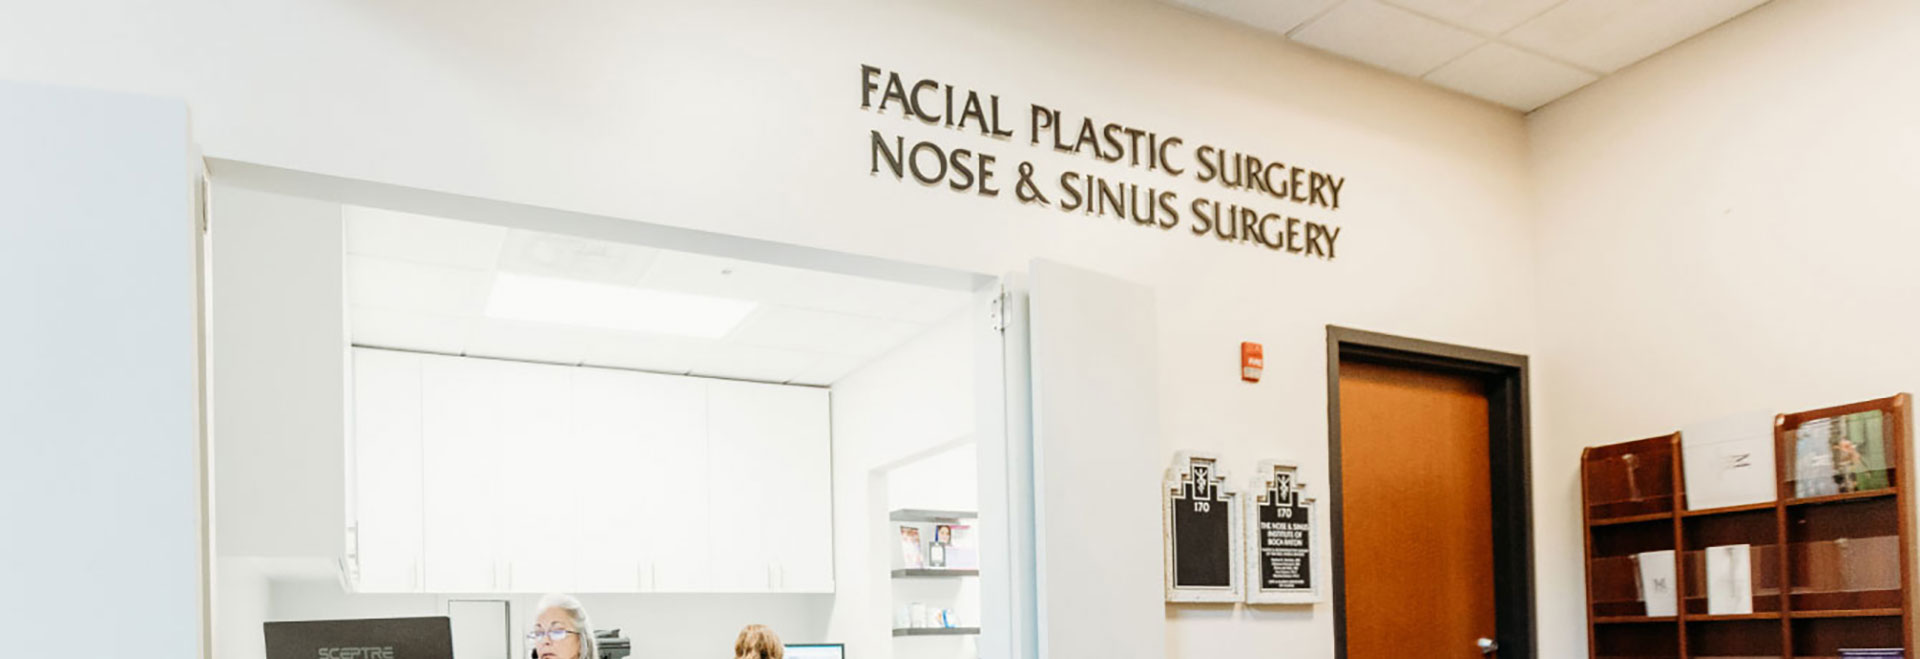 Contact us: Facial Plastic Surgery Nose and Sinus Surgery